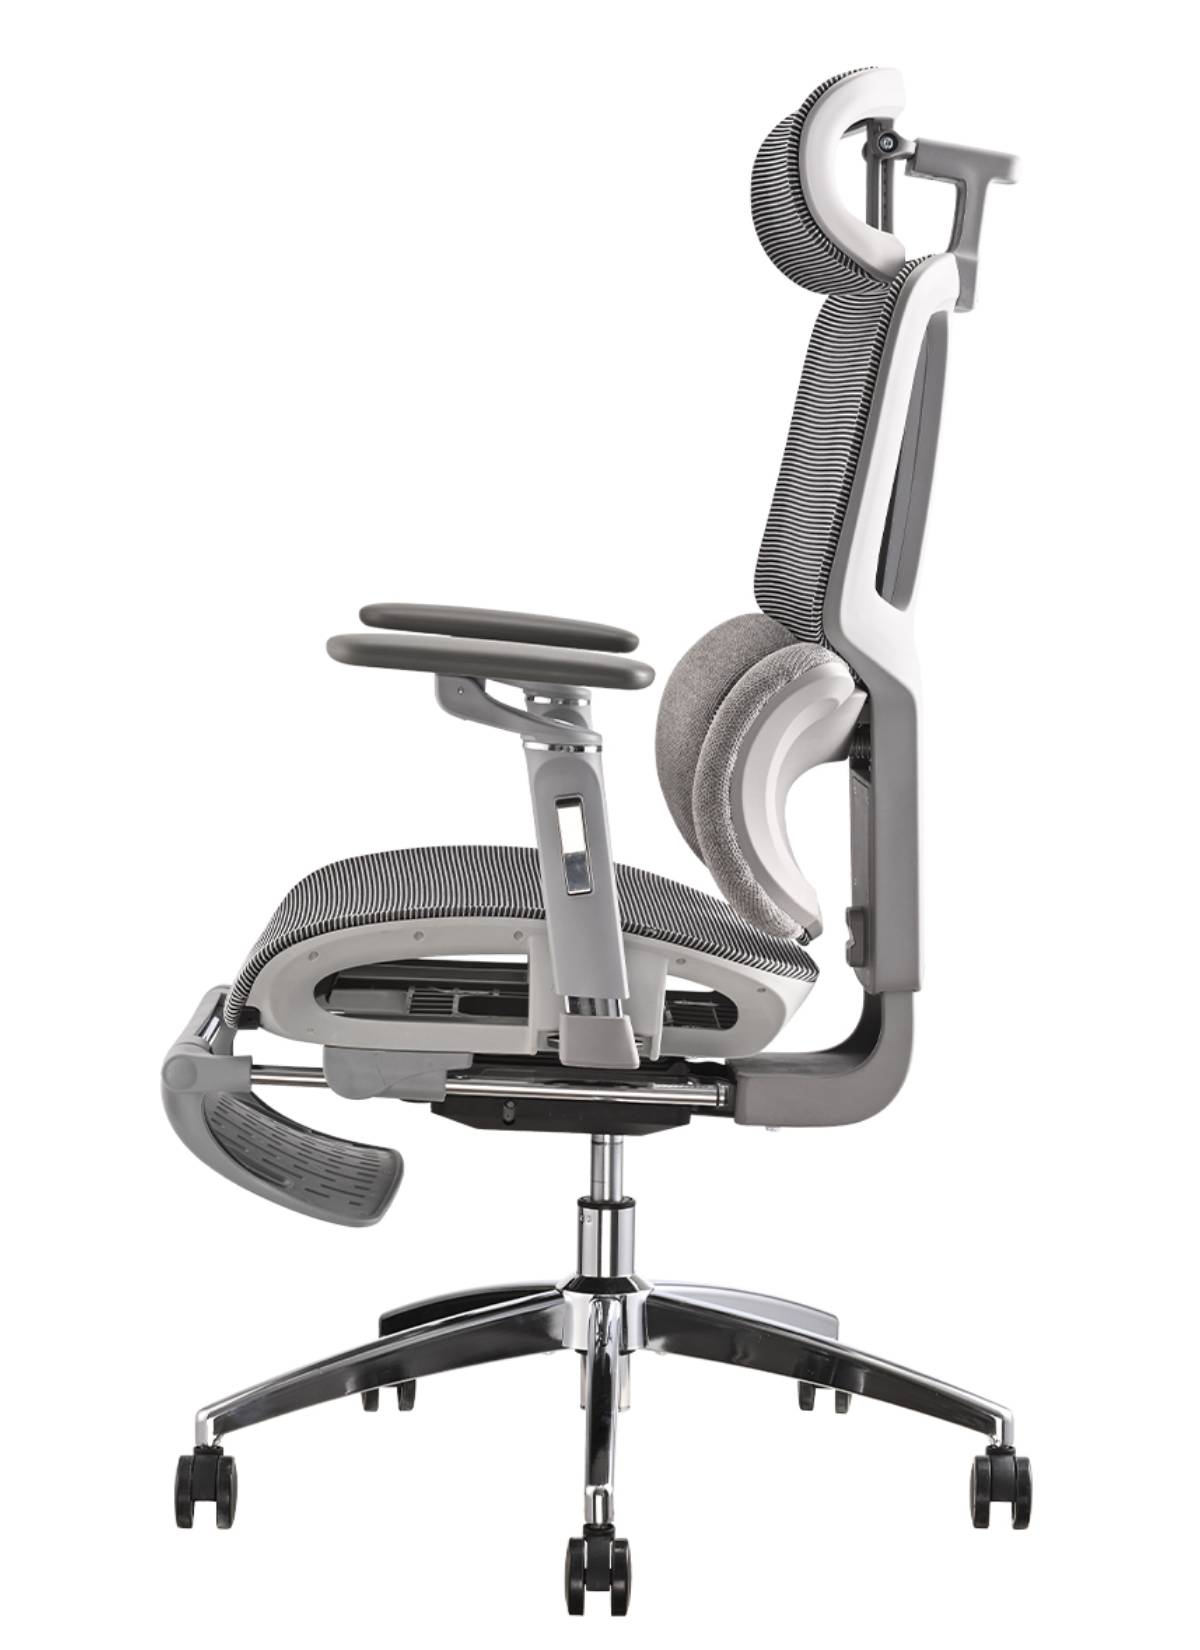 MUSSO H80 PRO  Ergo Chairs  Adjustable Headrest Ergonomic Mesh Office Chair  XL SIZE